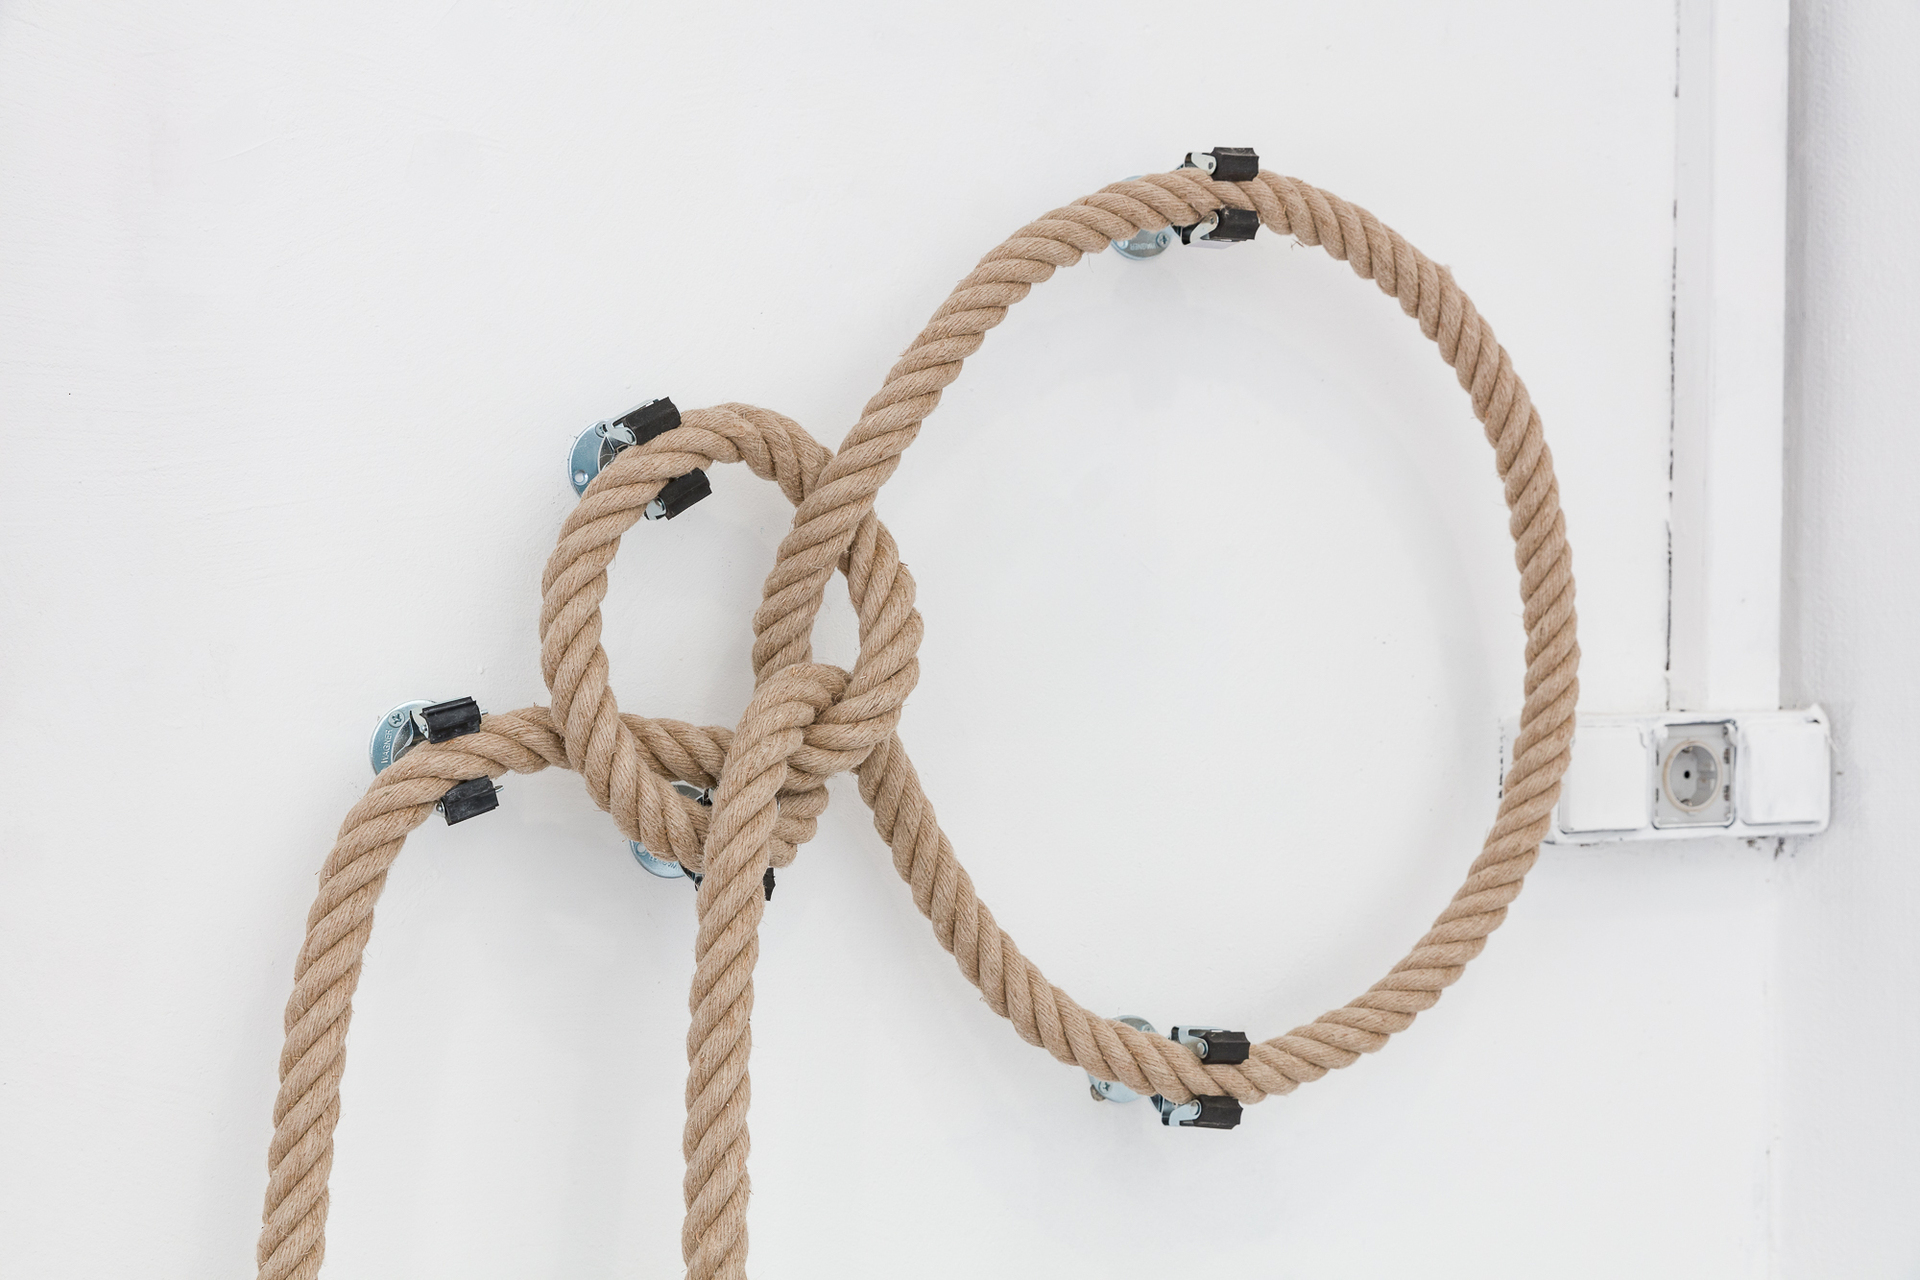 9Schirin Charlot, Round Dance, 2020, Hemp rope & device holder, 185 x 53 cm